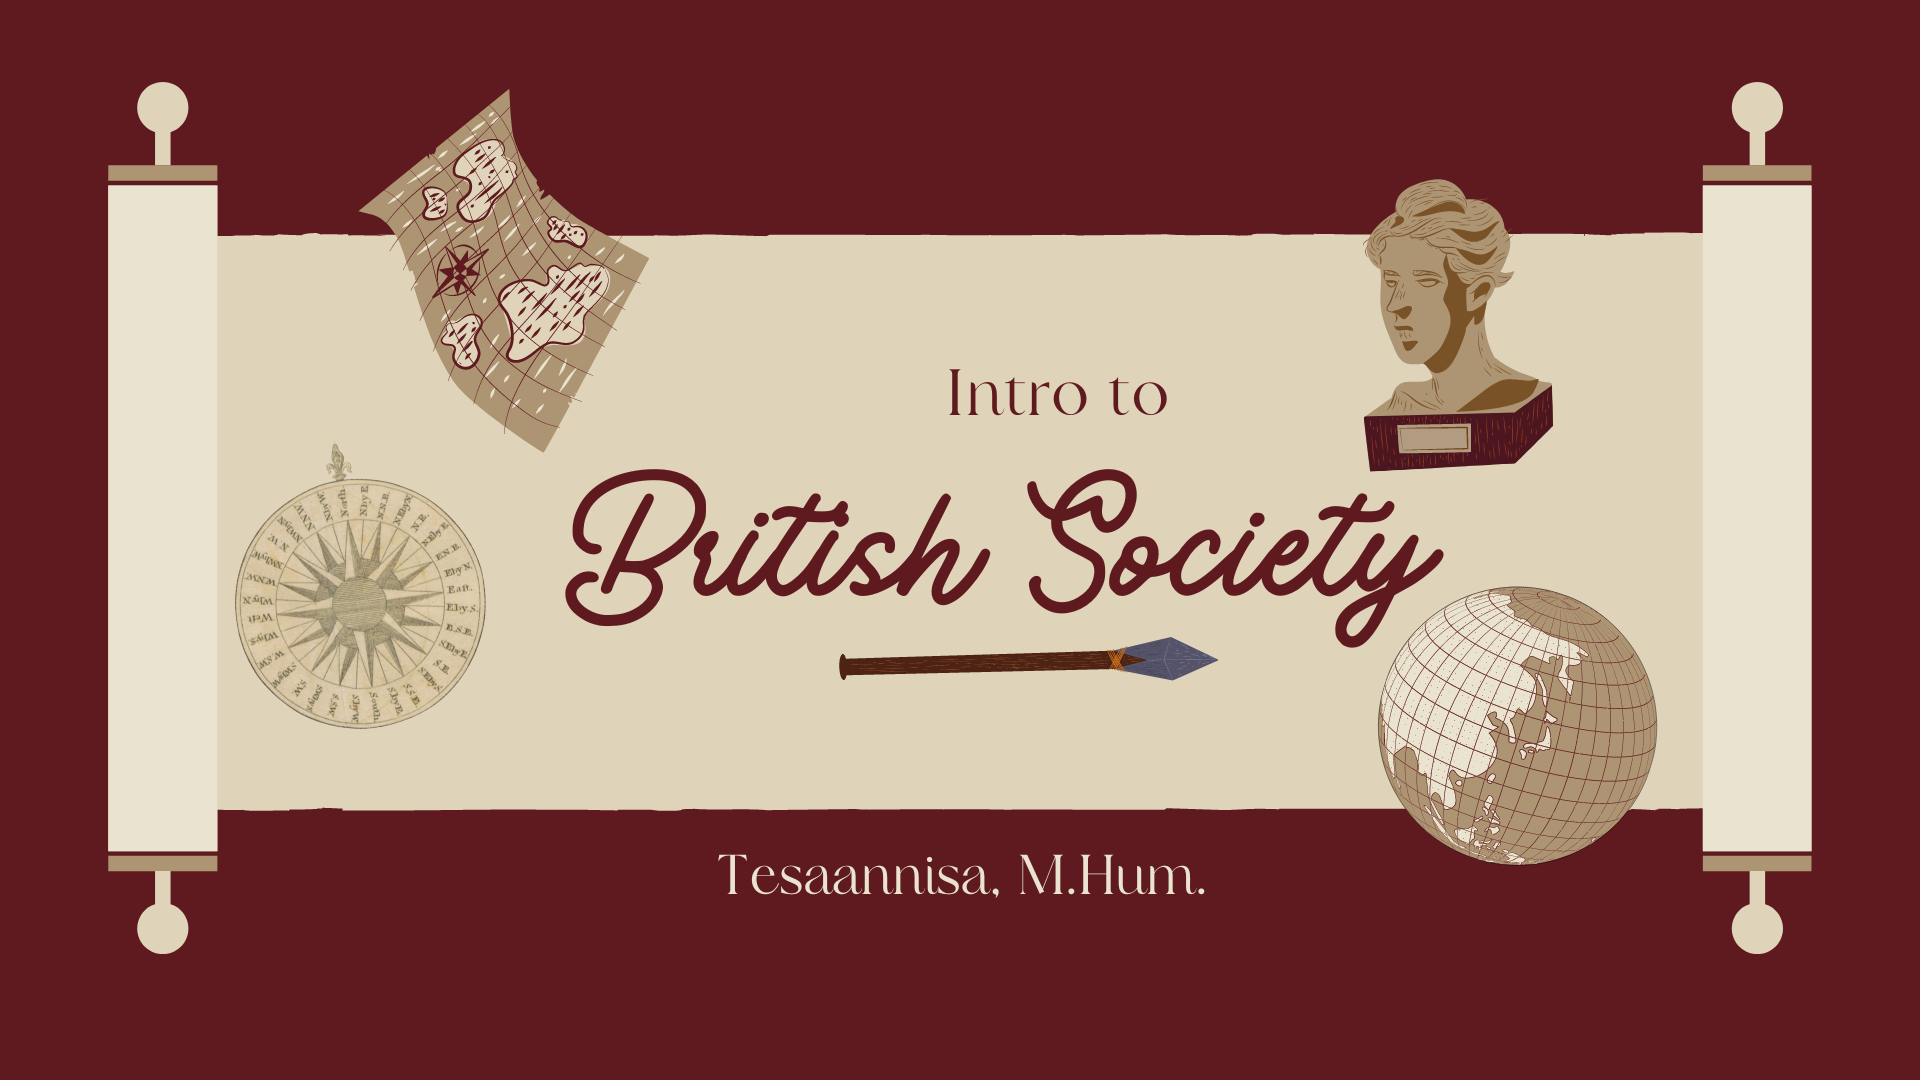 Introduction to British Society (Tesaaannisa)